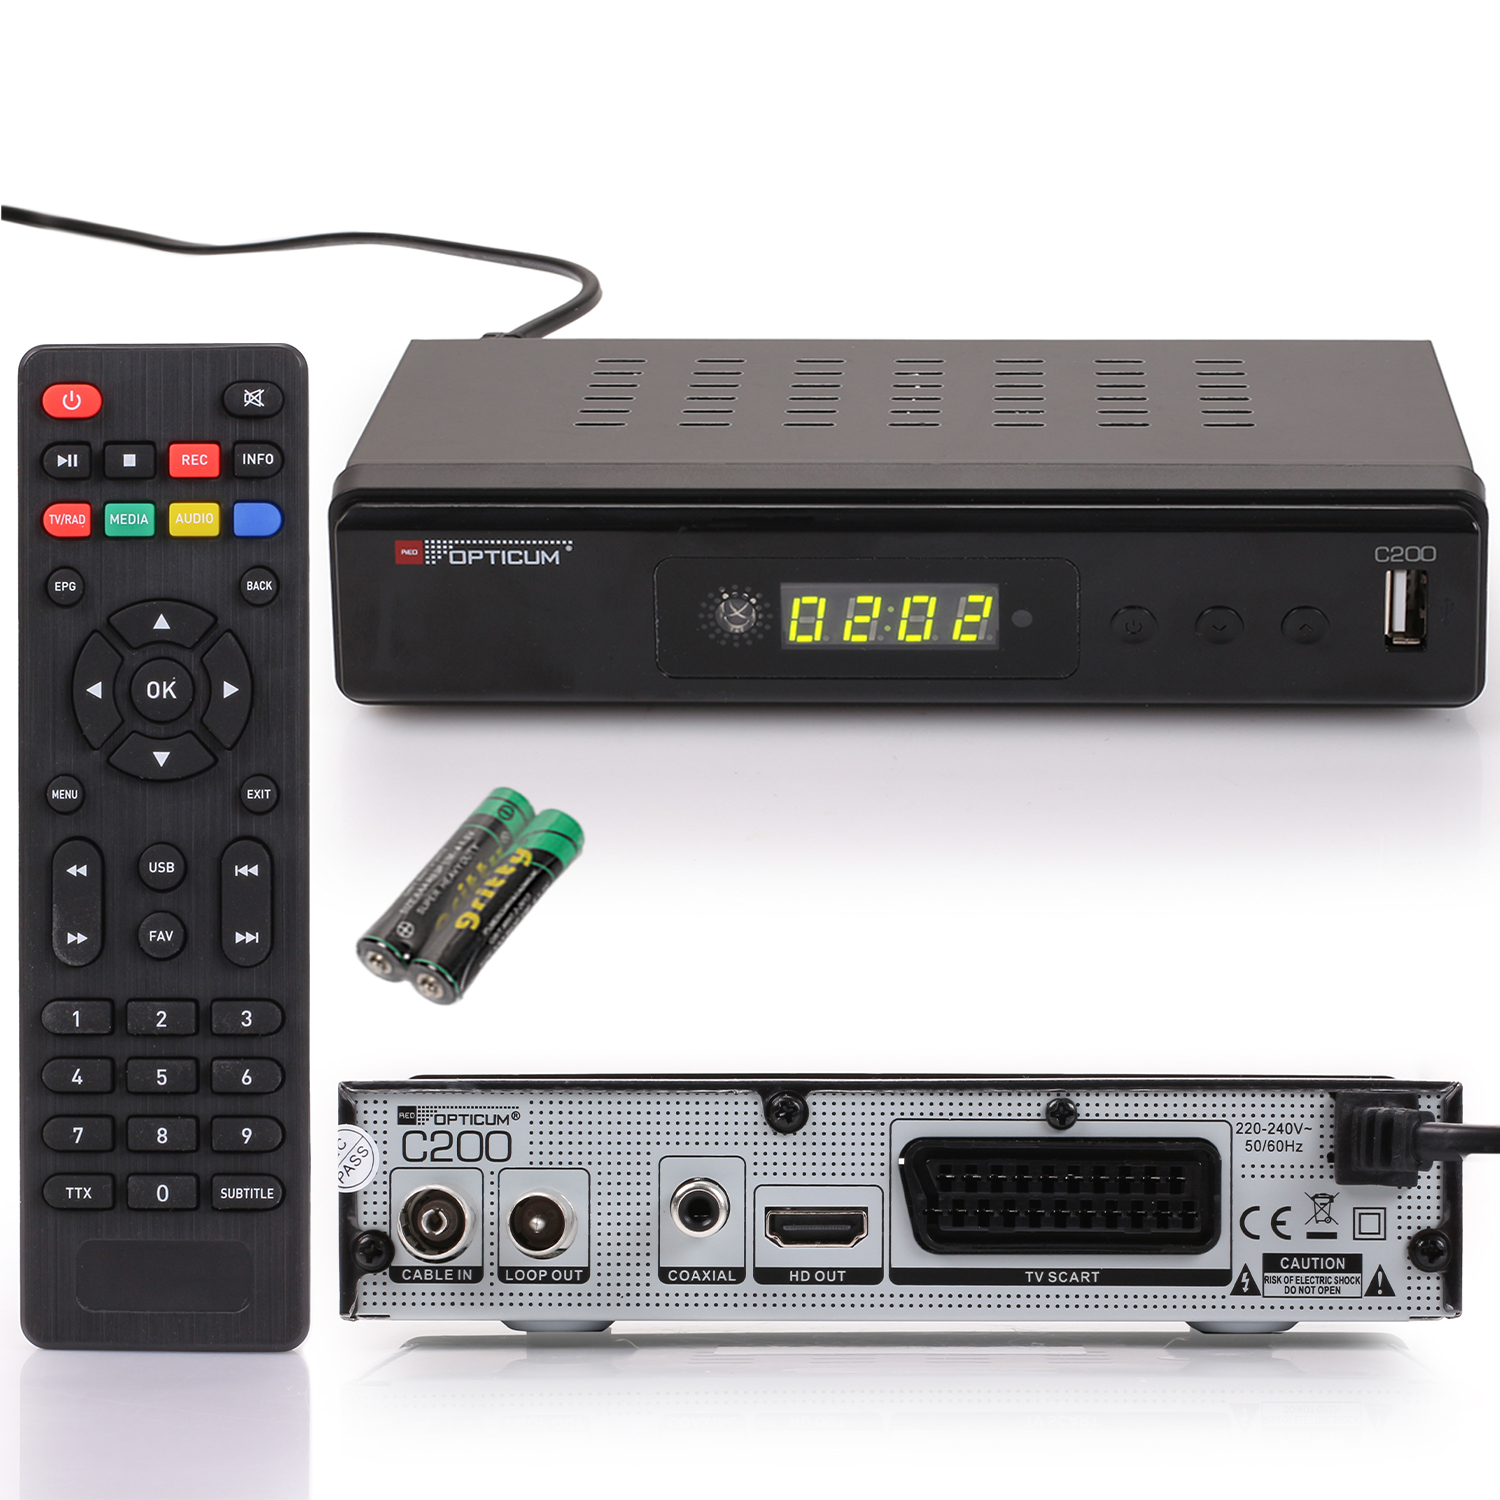 PVR RED mit Aufnahmefunktion Kabelreceiver DVB-C2, HD Receiver DVB-C, EPG schwarz) - HDMI-USB-SCART C200 HD - Kabel-Receiver OPTICUM I Digitaler (HDTV, PVR-Funktion, DVB-C